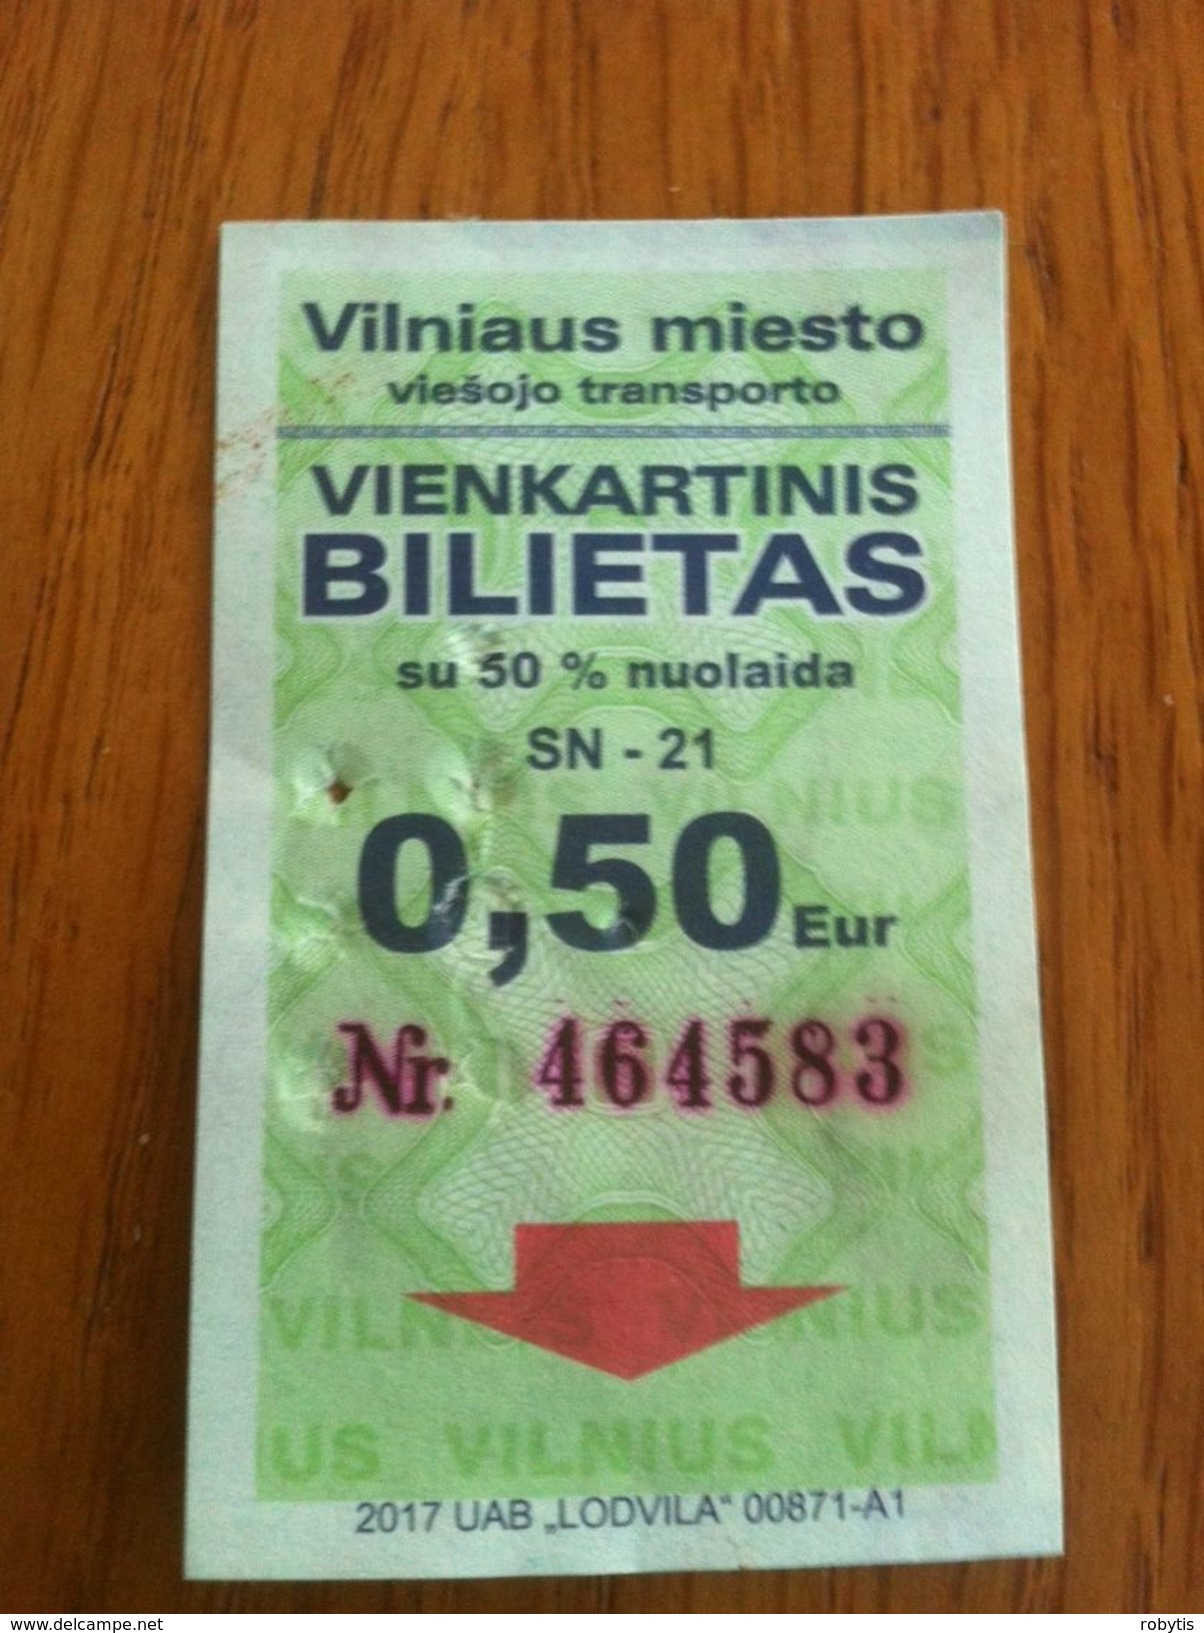 Lithuania Vilnius One Way Ticket - Bus 2017 - Europa